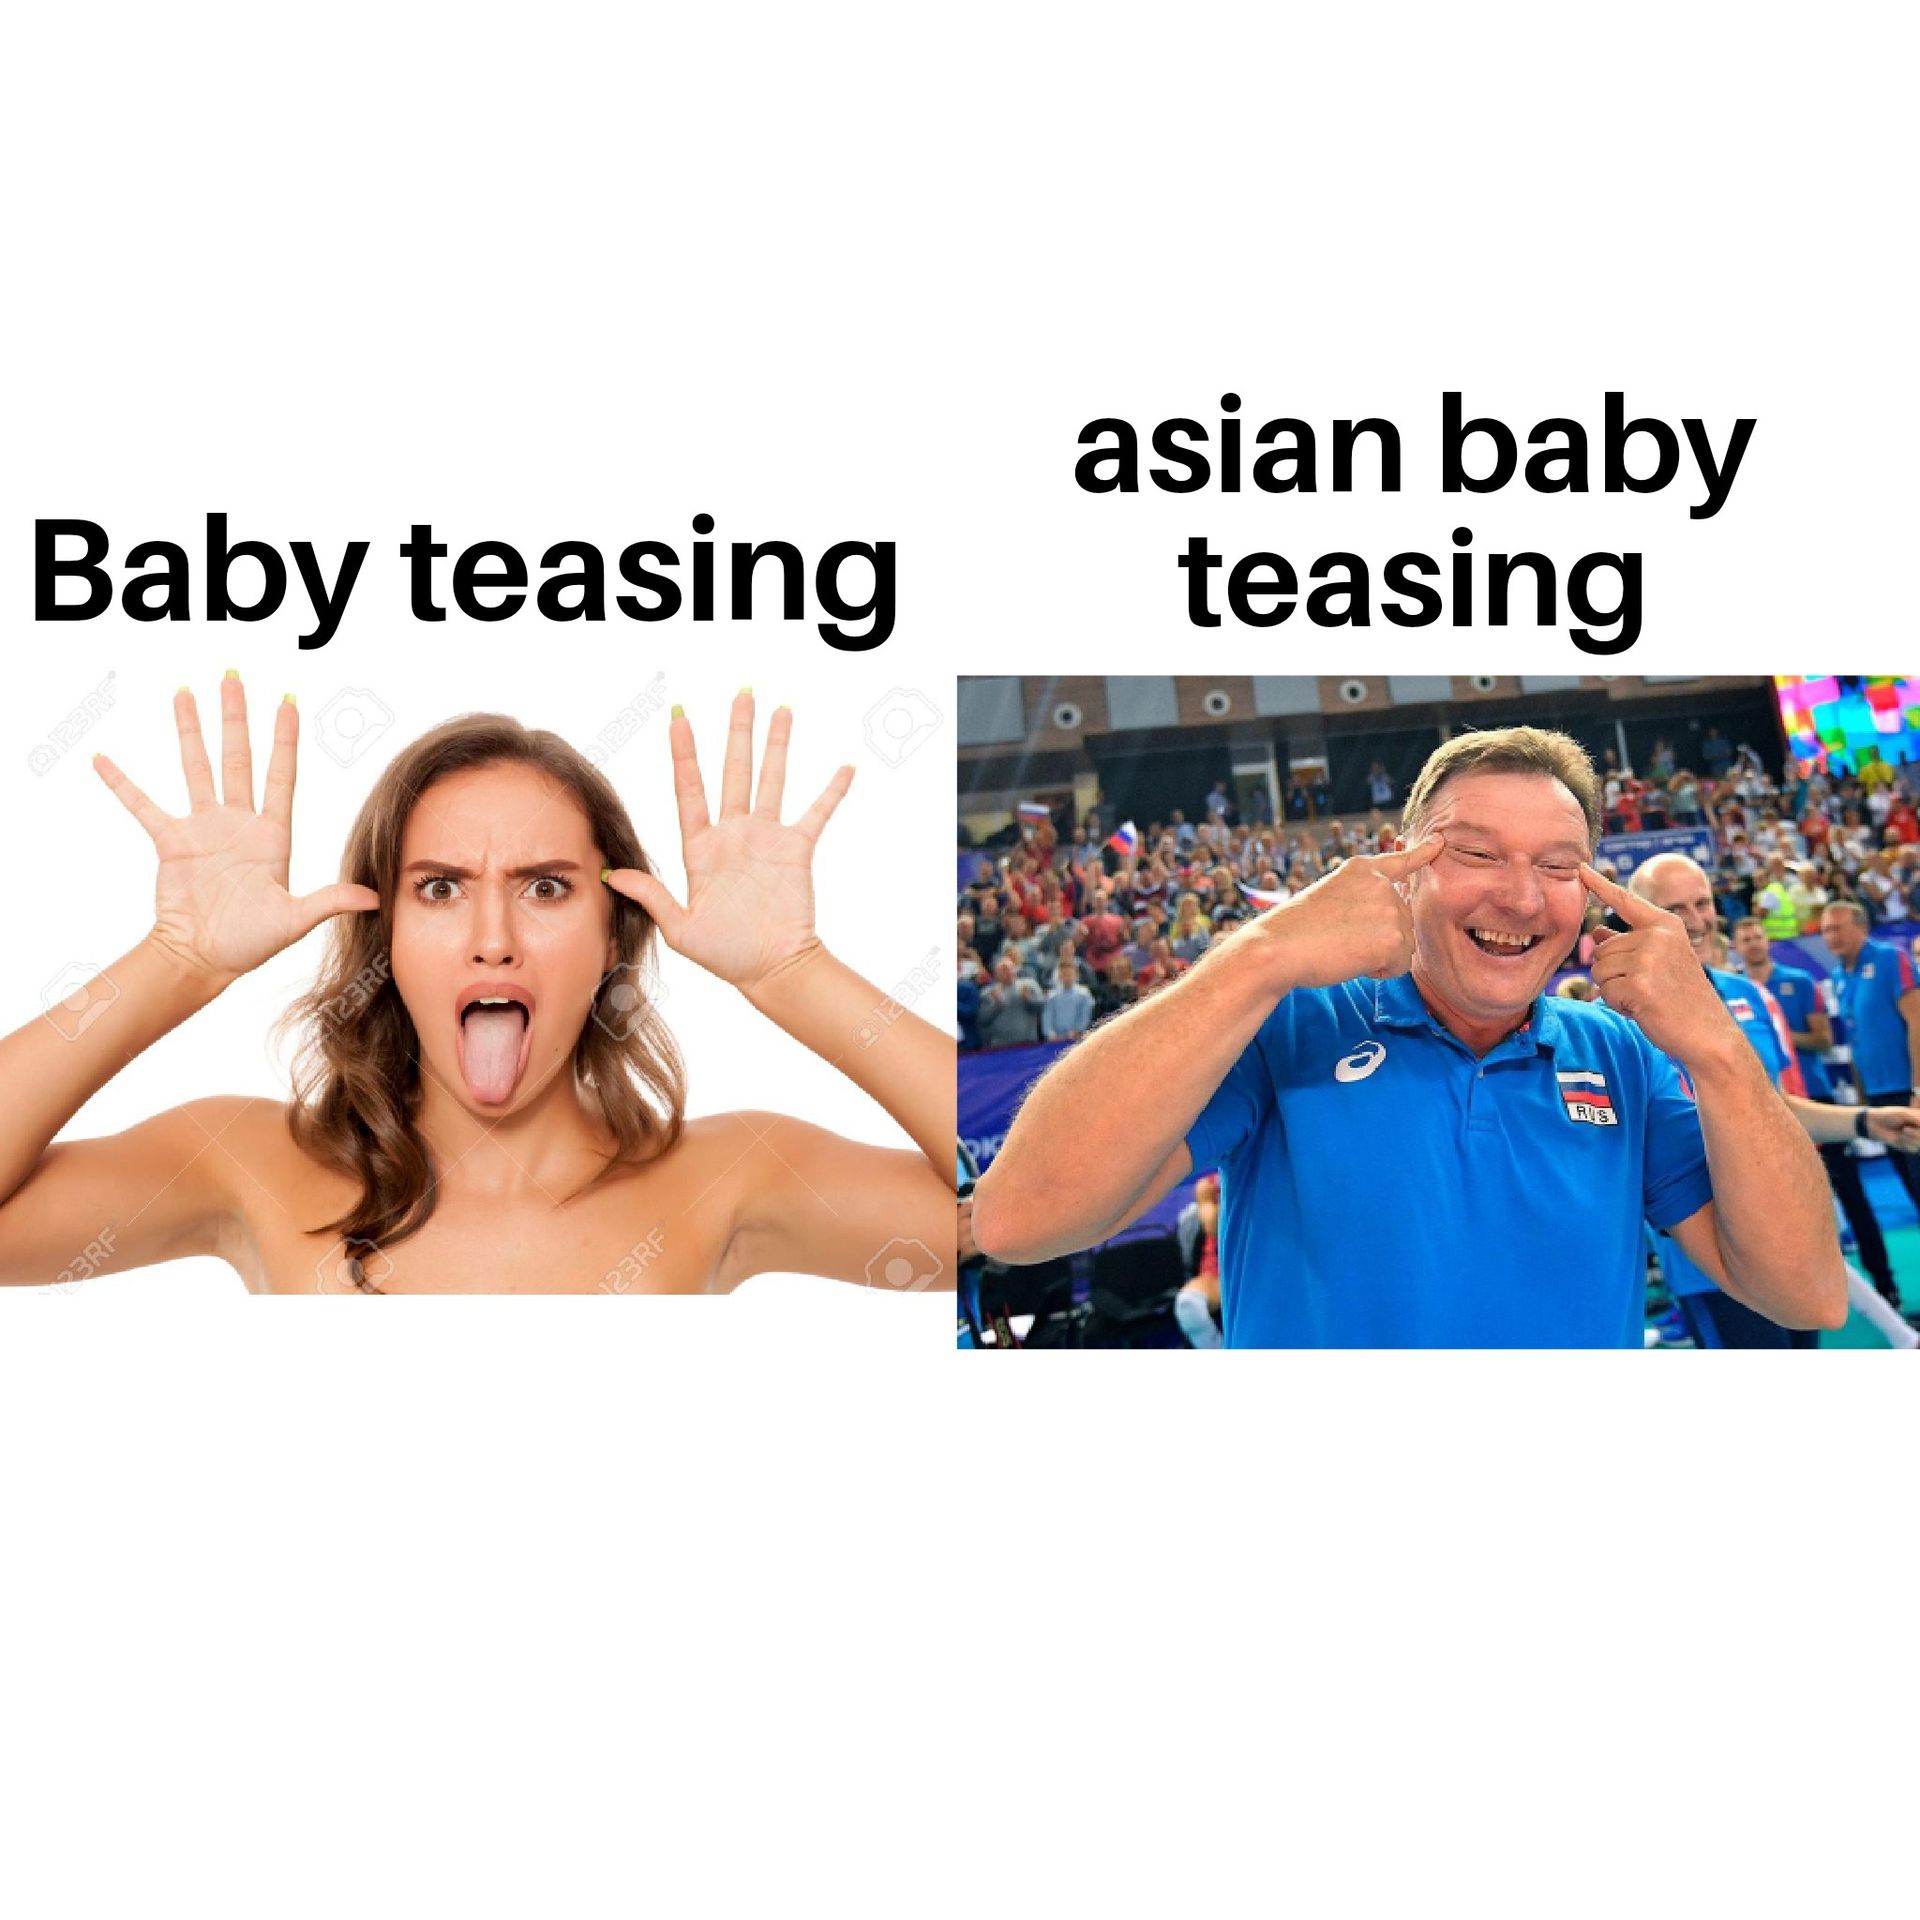 Baby teasing
123RF
123RF
123RF
123RF
asian baby
teasing
RIS